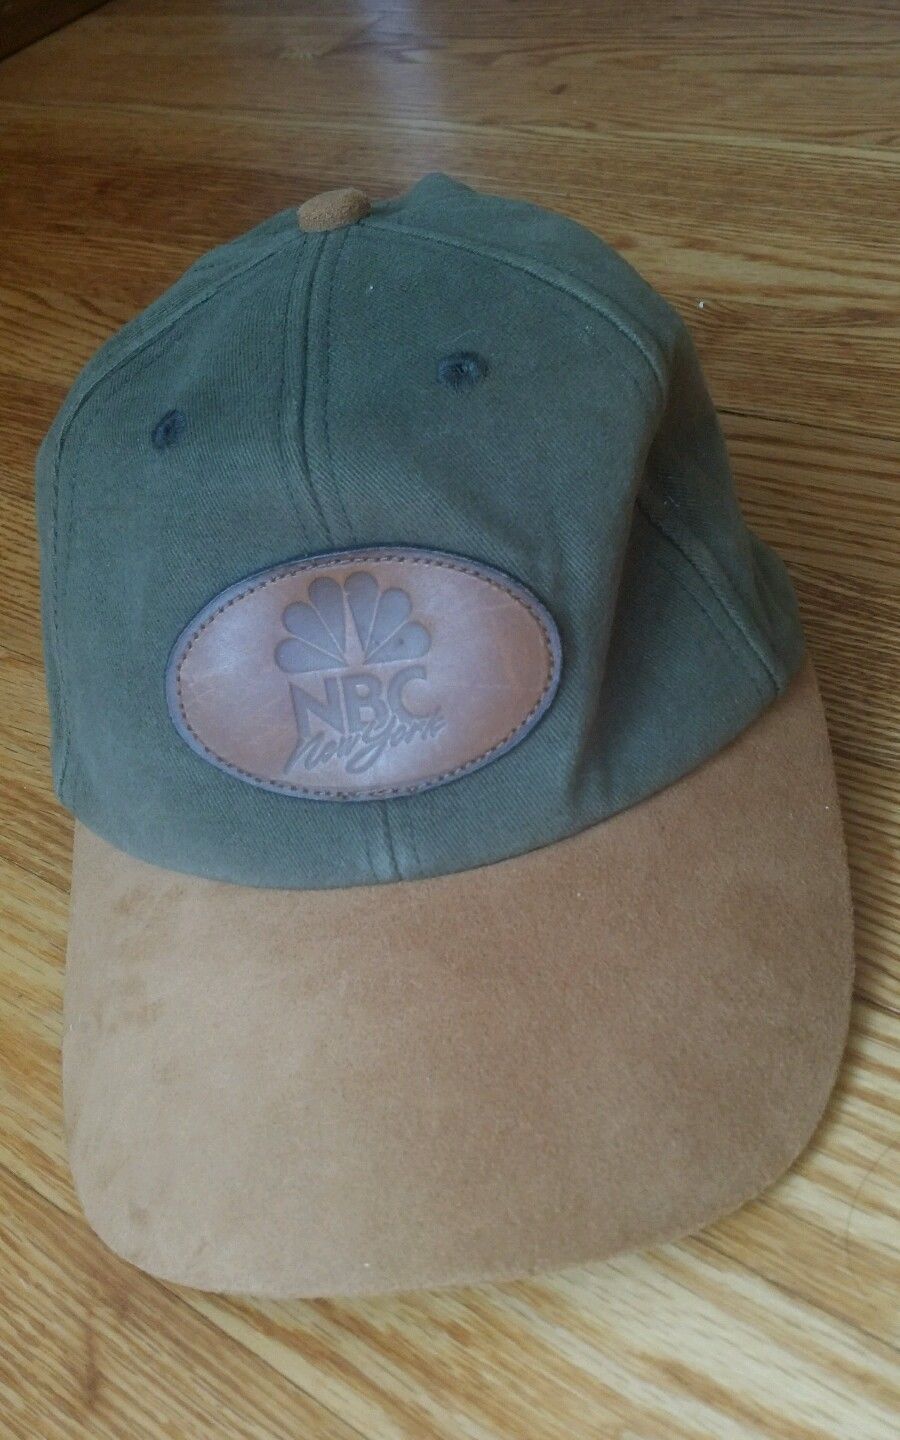 Vintage NBC Experience New York Cotton Leather logo trucker baseball cap hat USA - $14.80